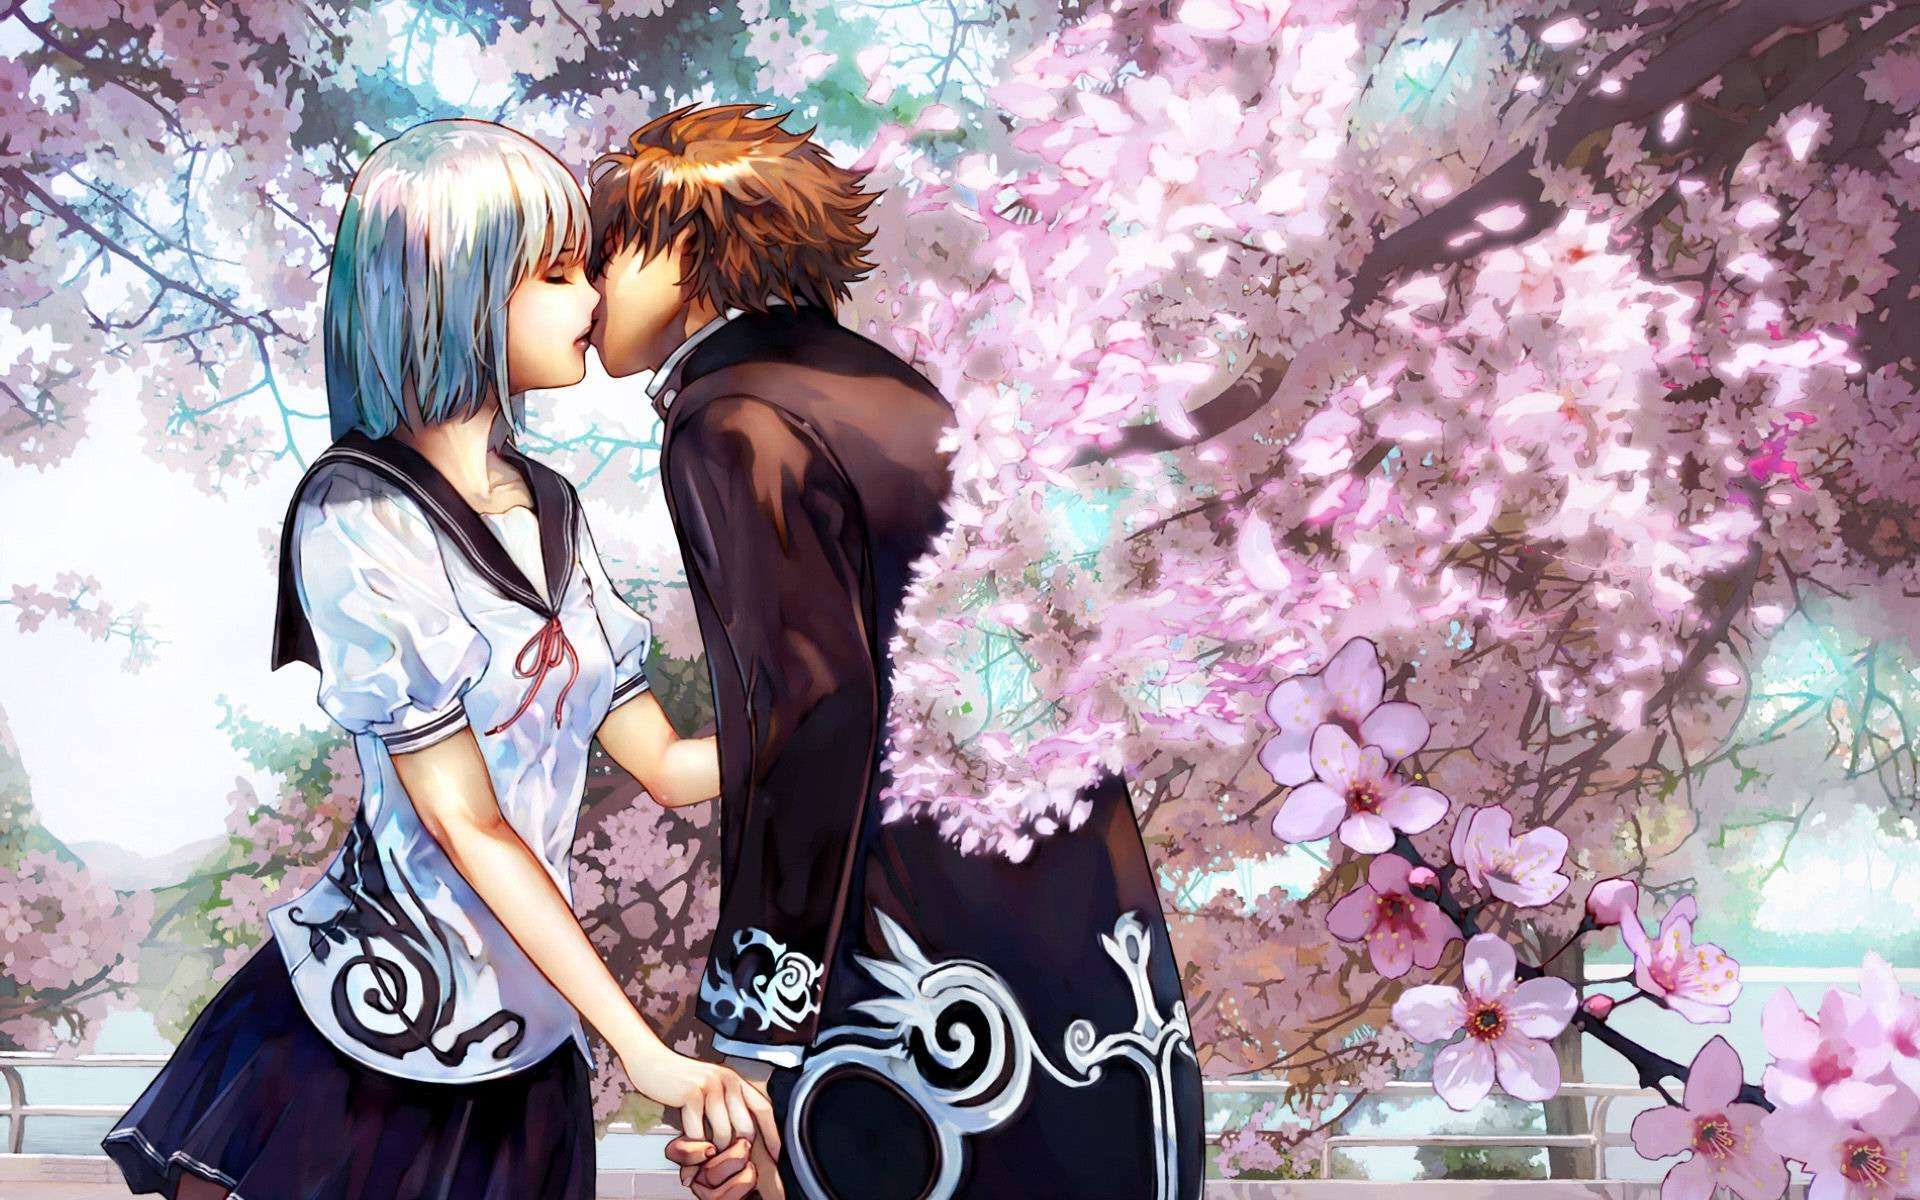 Anime Couple Wallpaper, 37 Desktop Image of Anime Couple